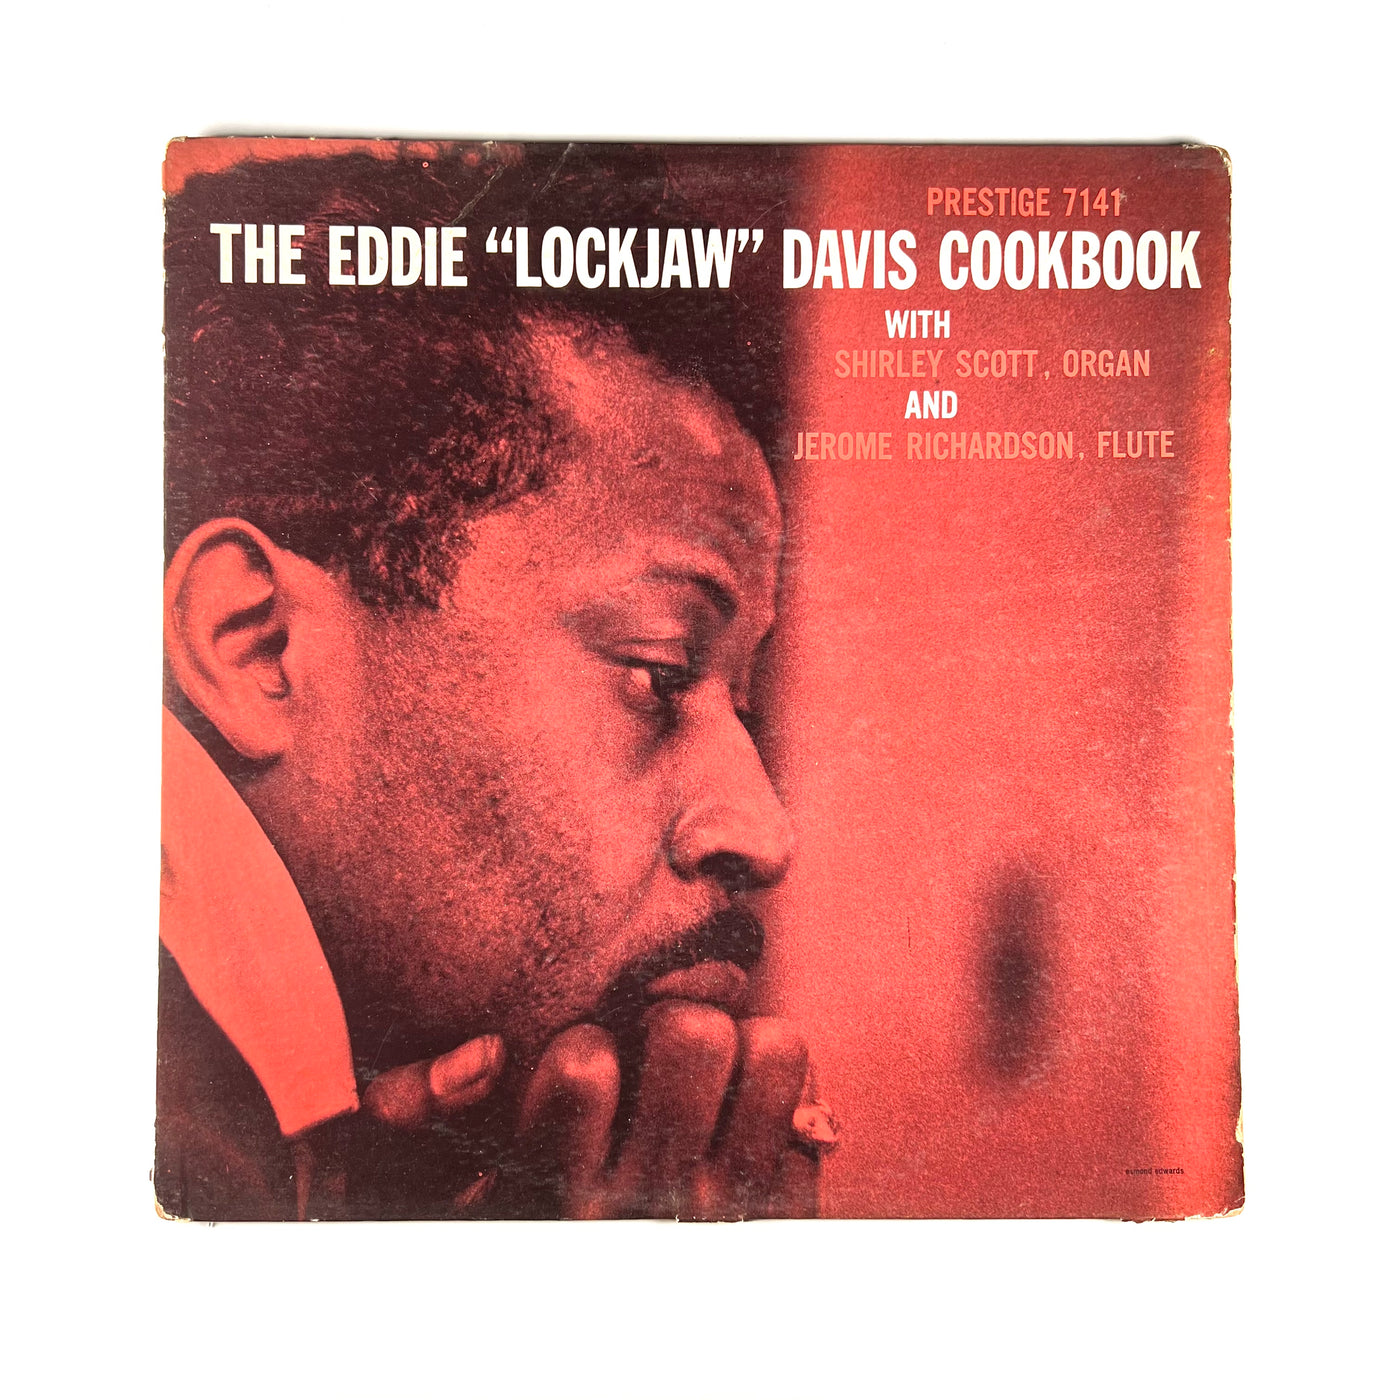 Eddie "Lockjaw" Davis With Shirley Scott And Jerome Richardson - The Eddie "Lockjaw" Davis Cookbook